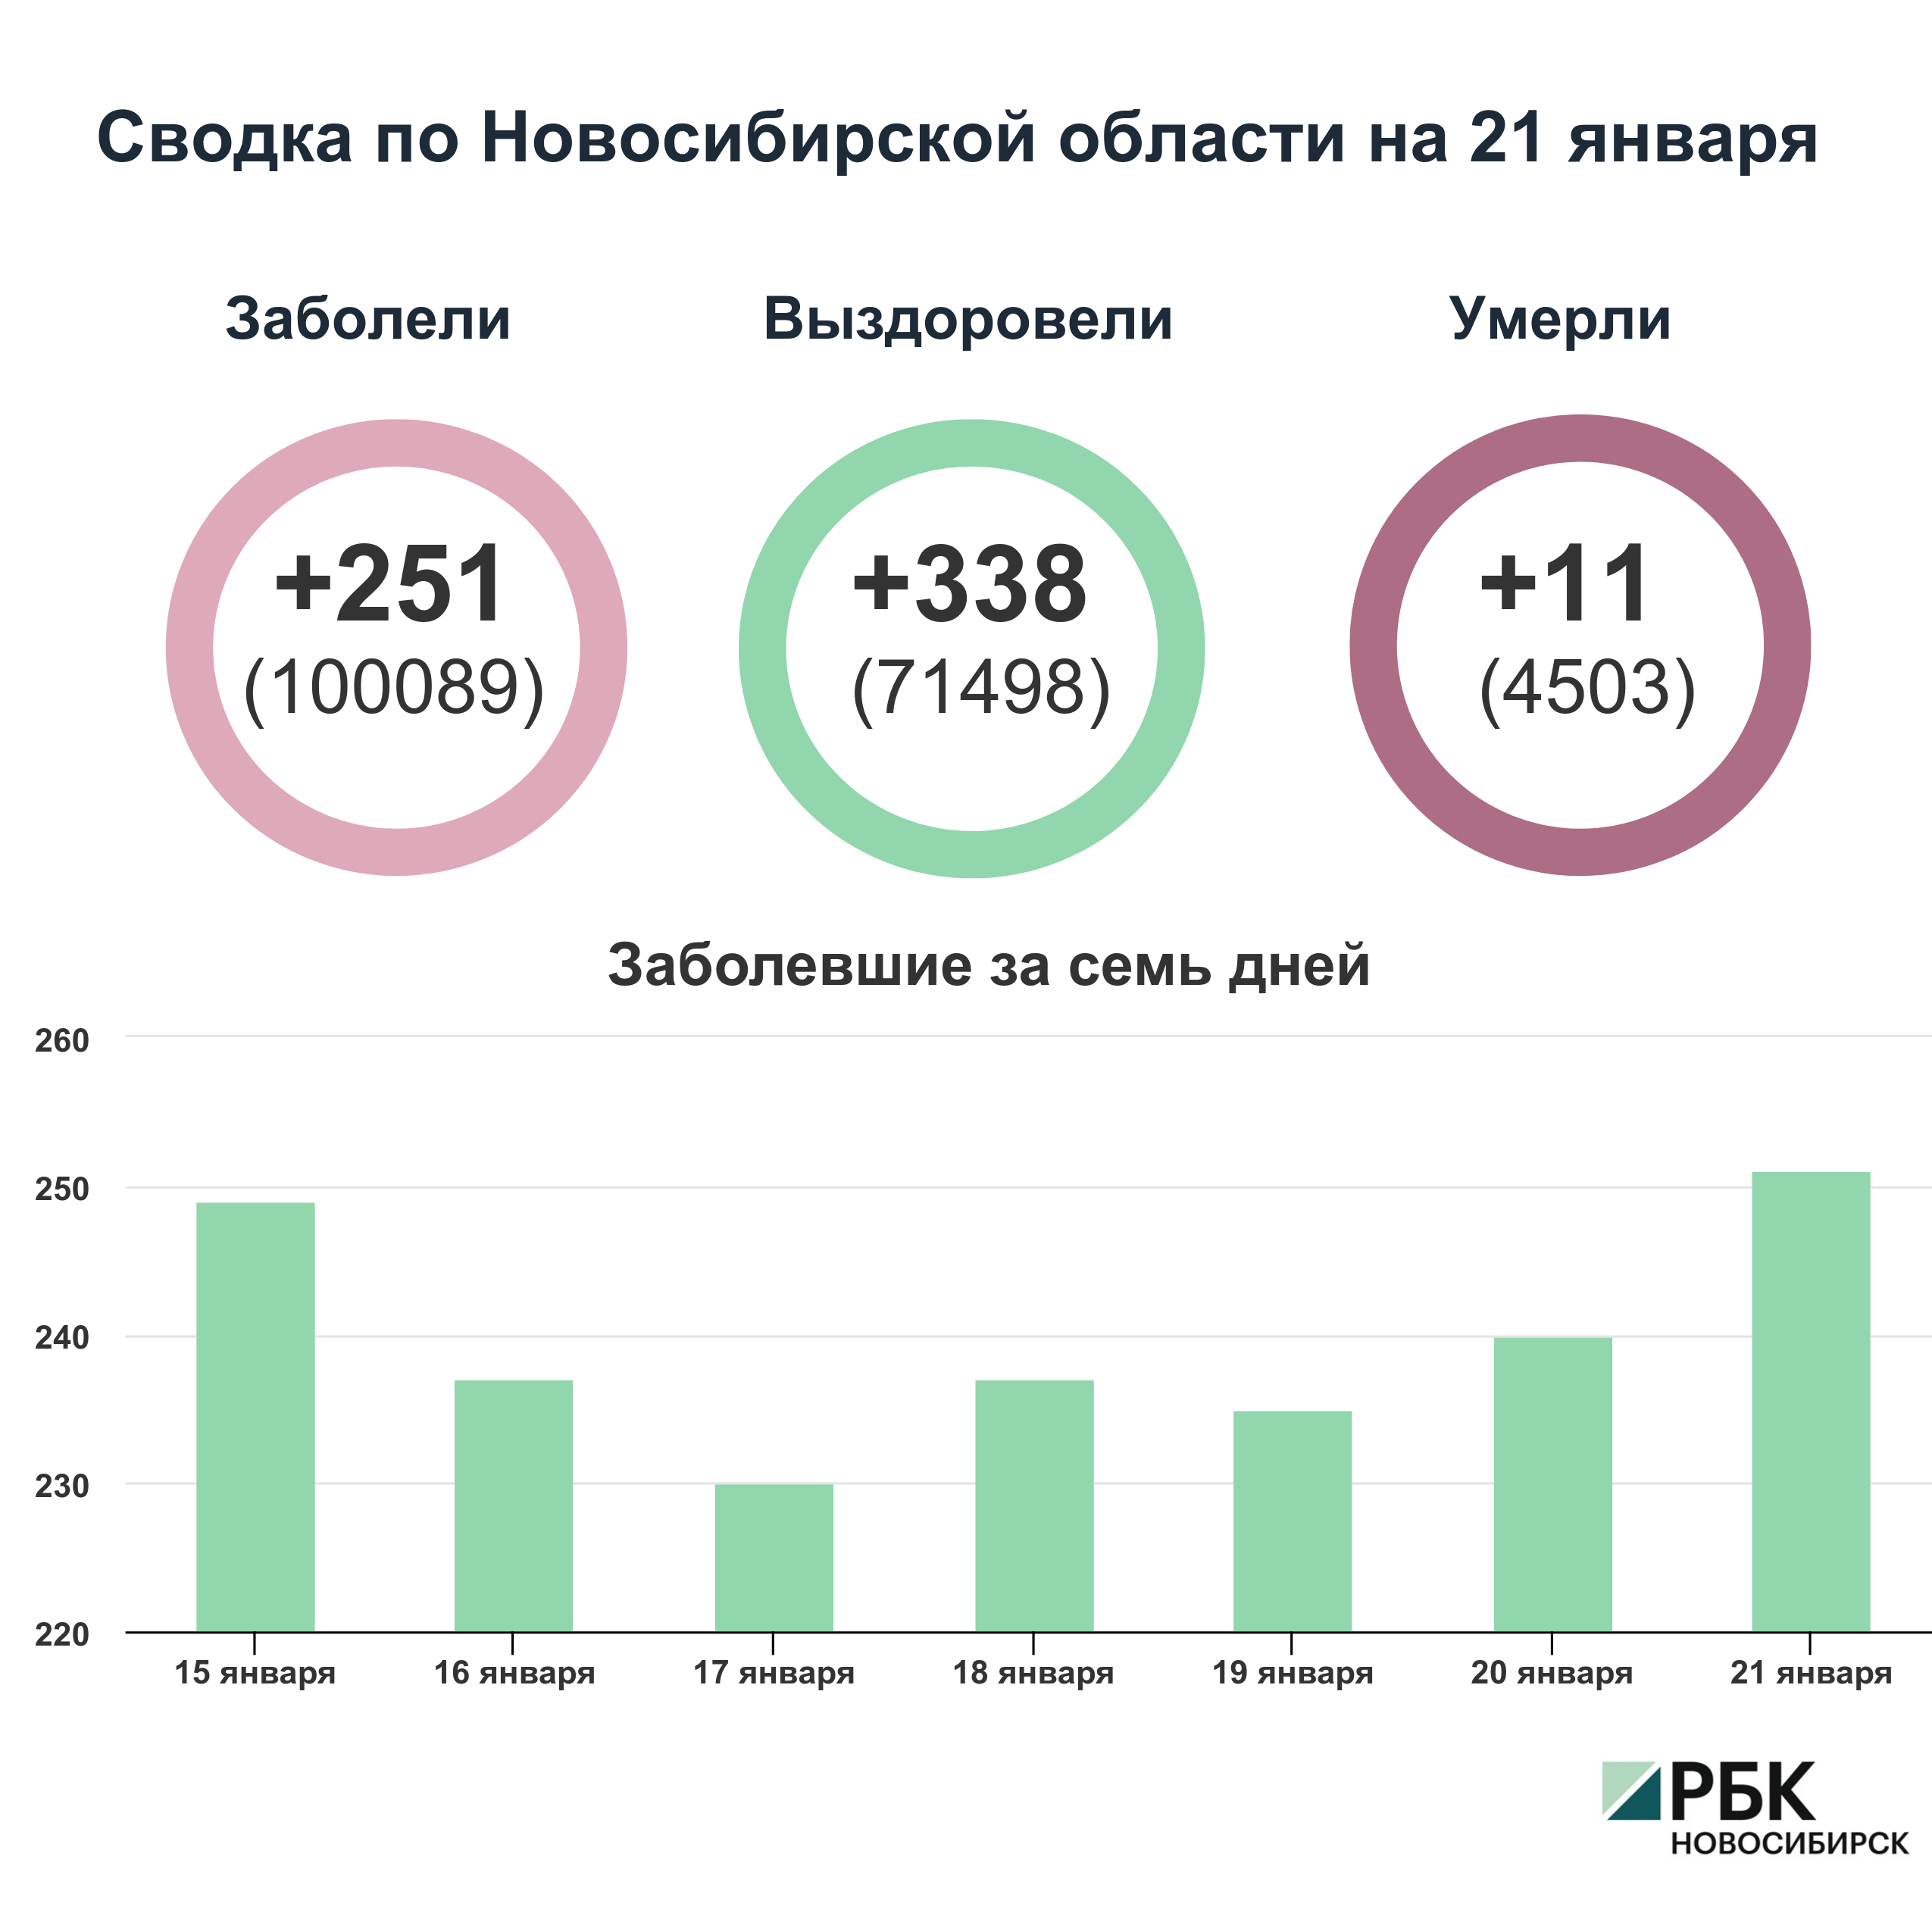 Коронавирус в Новосибирске: сводка на 21 января